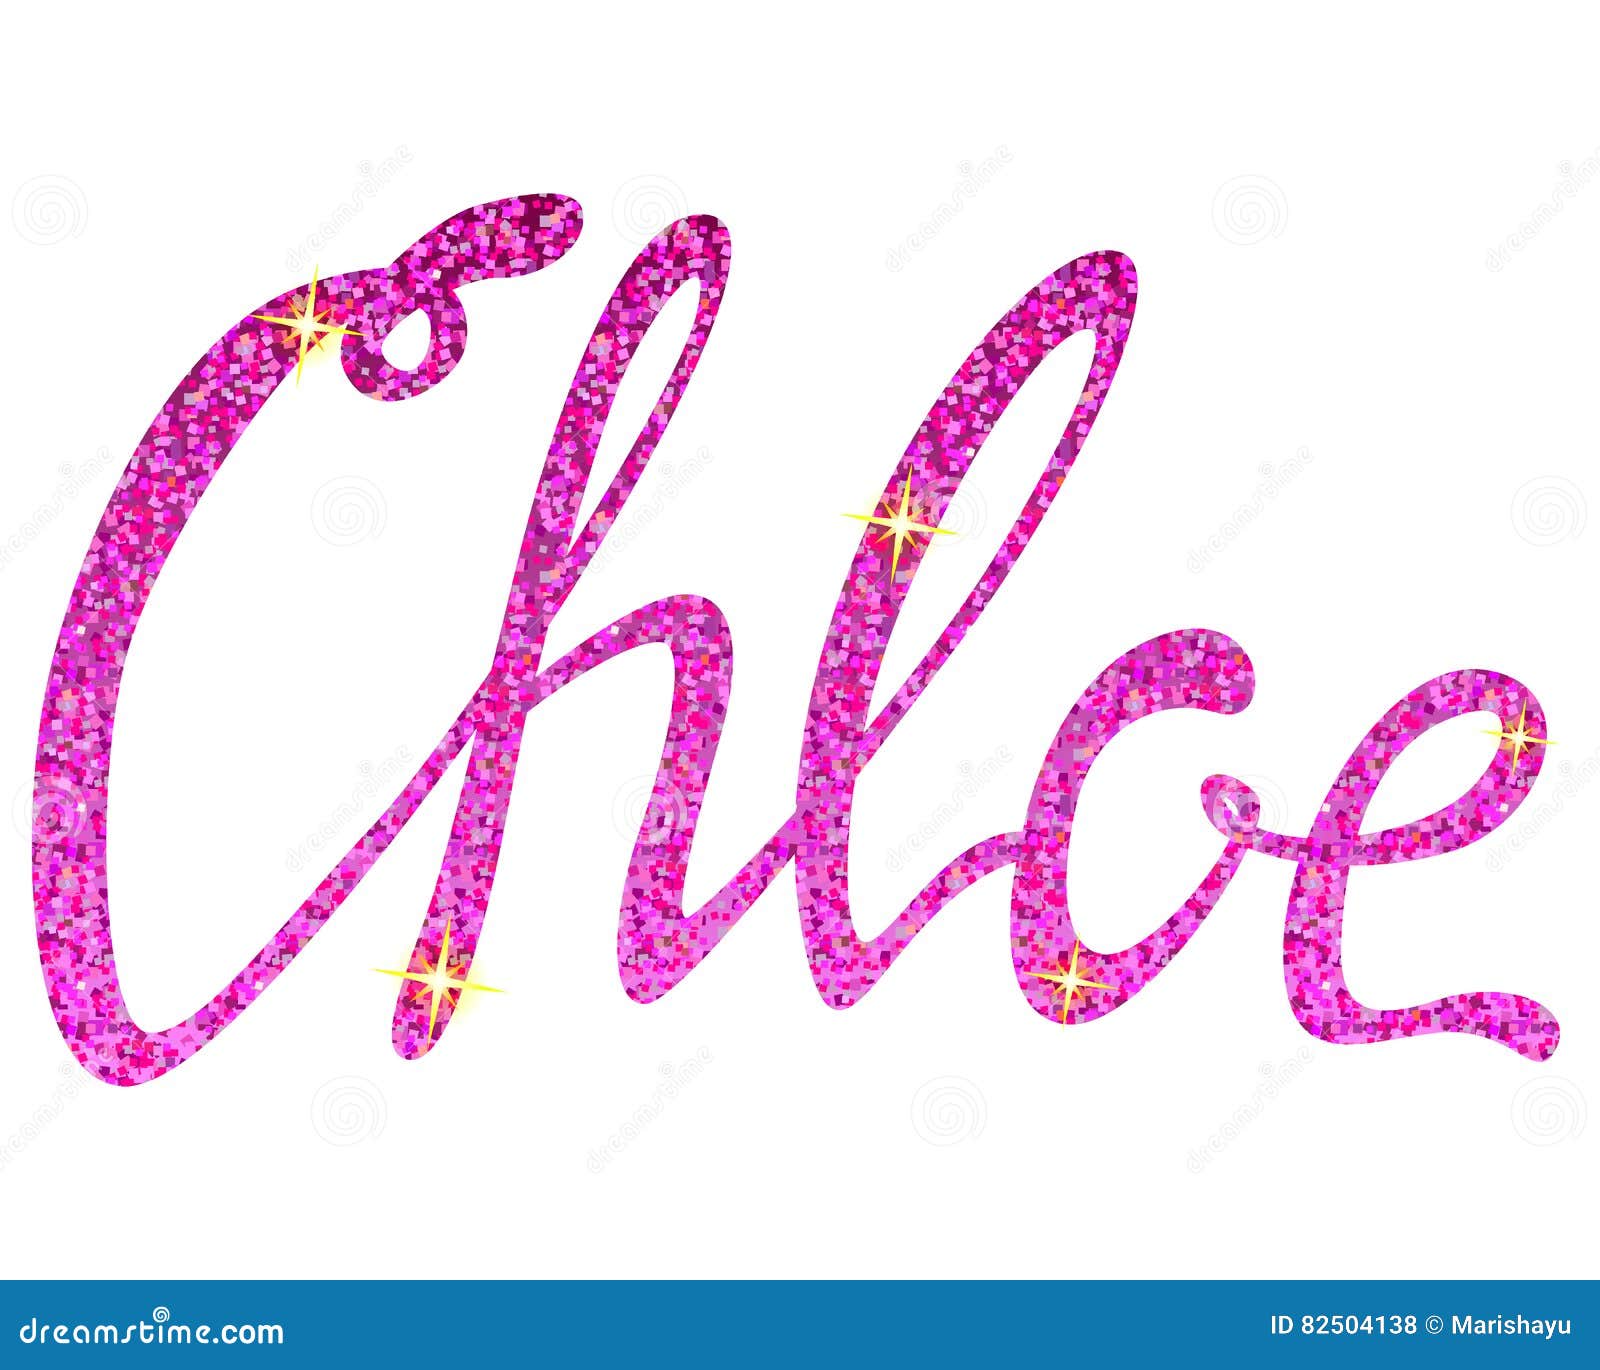 Chloe Logo PNG Images, Chloe Logo Clipart Free Download